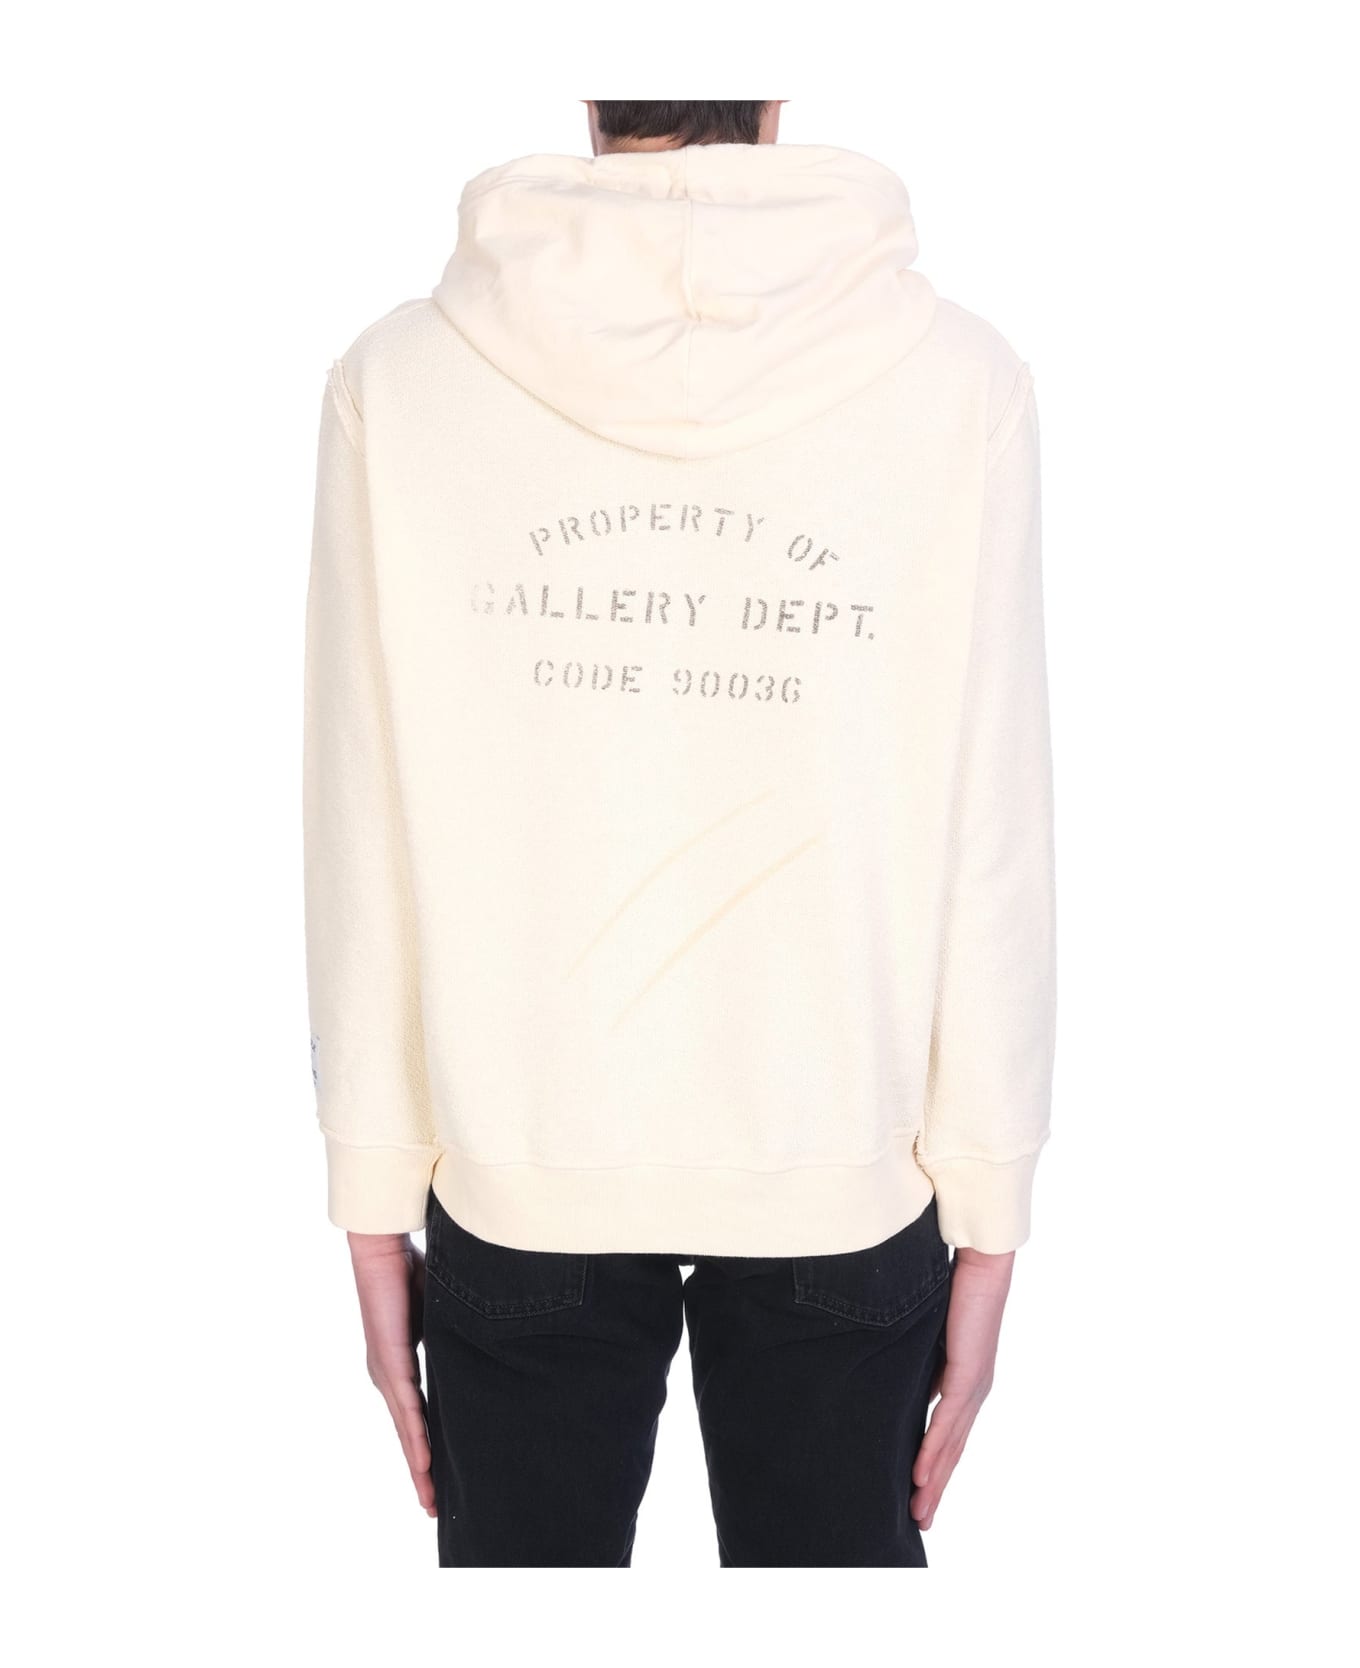 Lanvin Gallery Dept Hooded Sweatshirt - Beige フリース